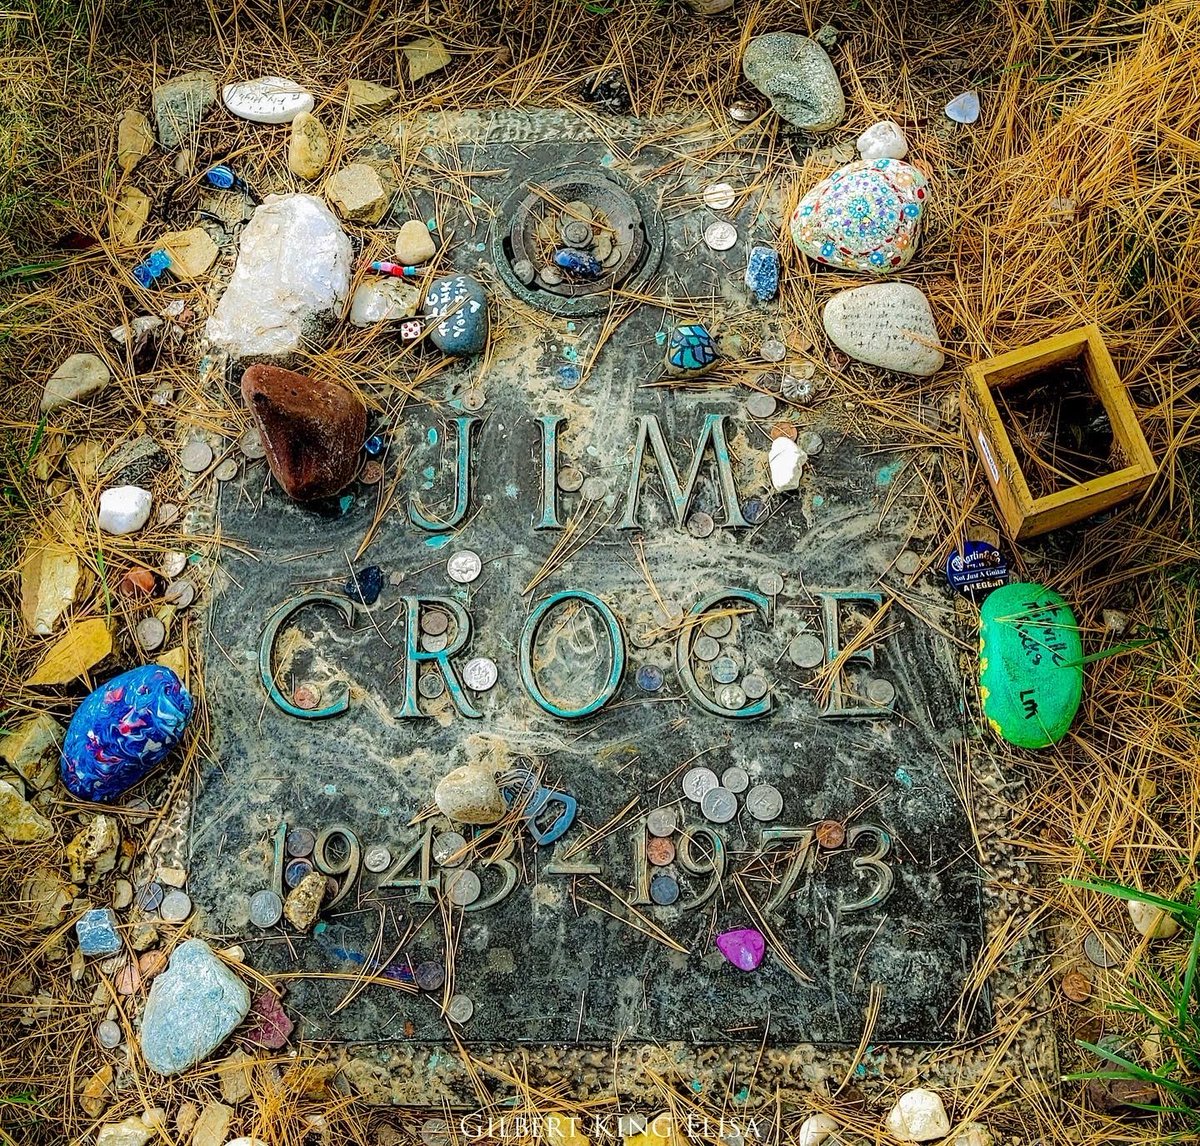 Jim Croce (1943-1973) /Singer & Songwriter 

#Musicians #singers #photographer #GilbertKingElisa #jimcroce #burial #gravesite #photography